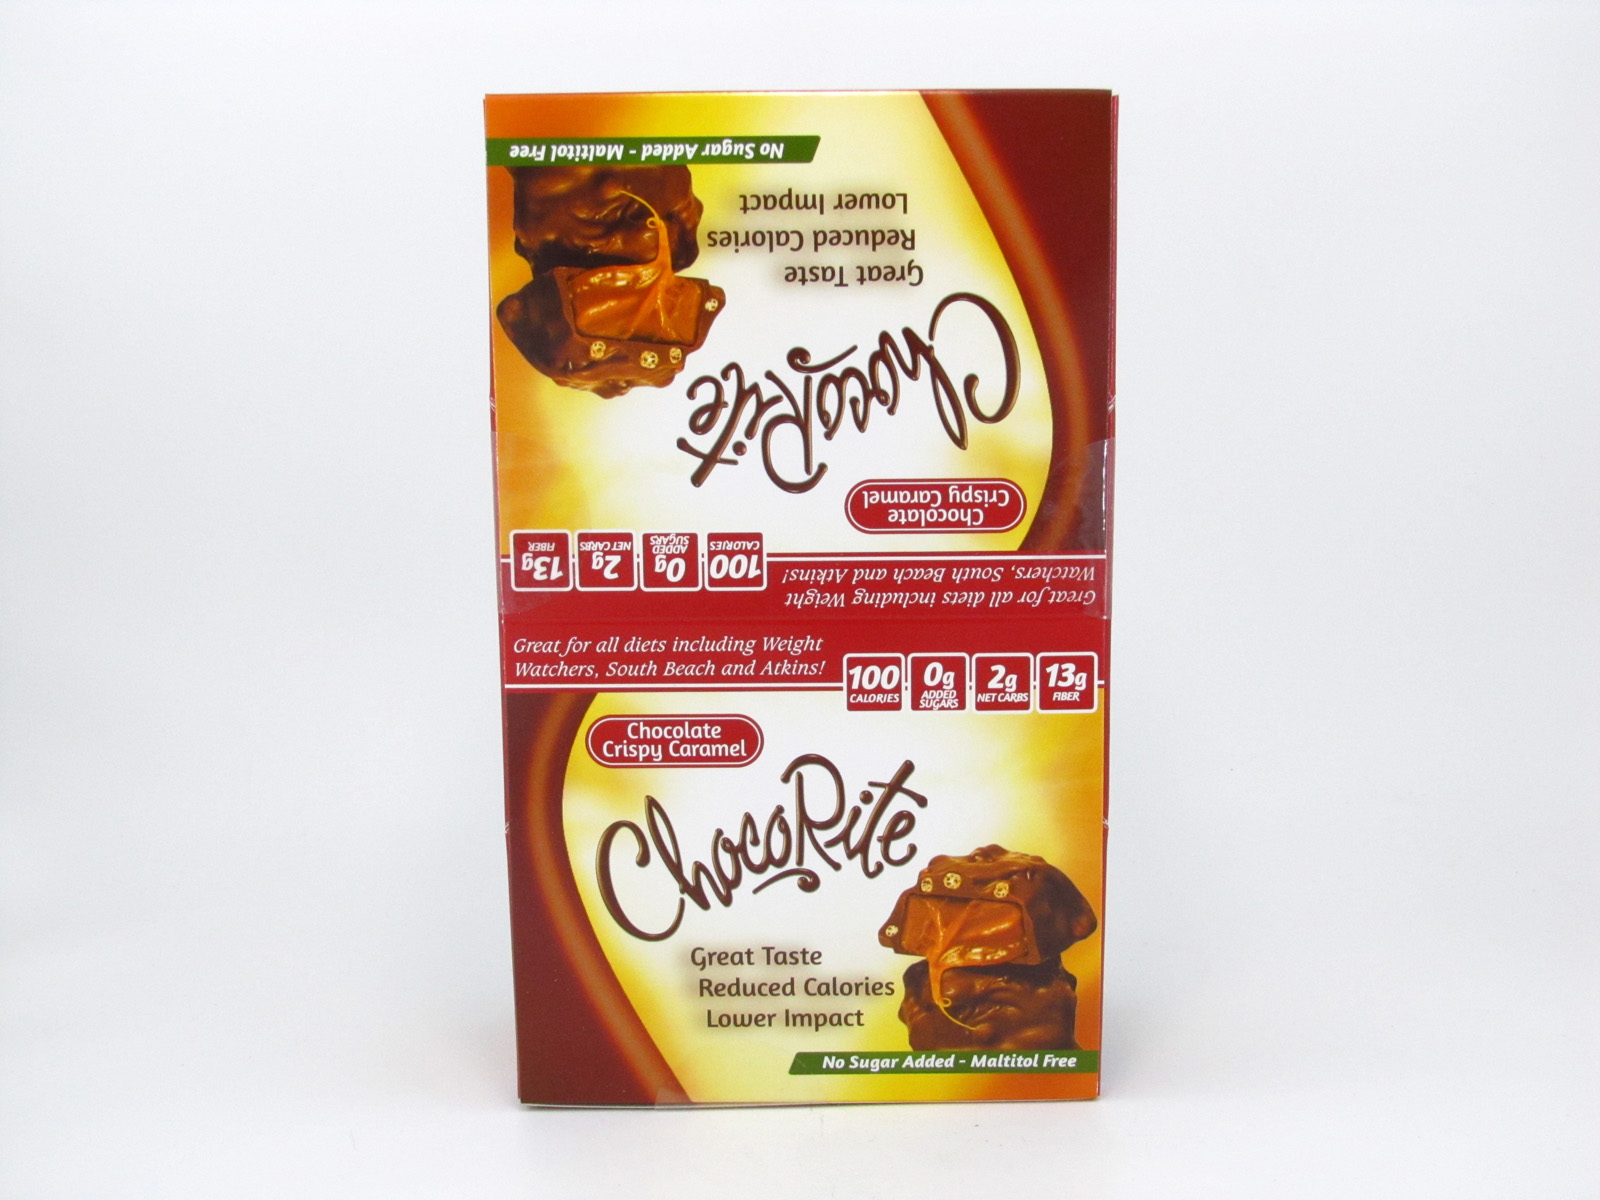 Chocorite Bar (32g) - Chocolate Crispy Caramel Box of 16 - front view